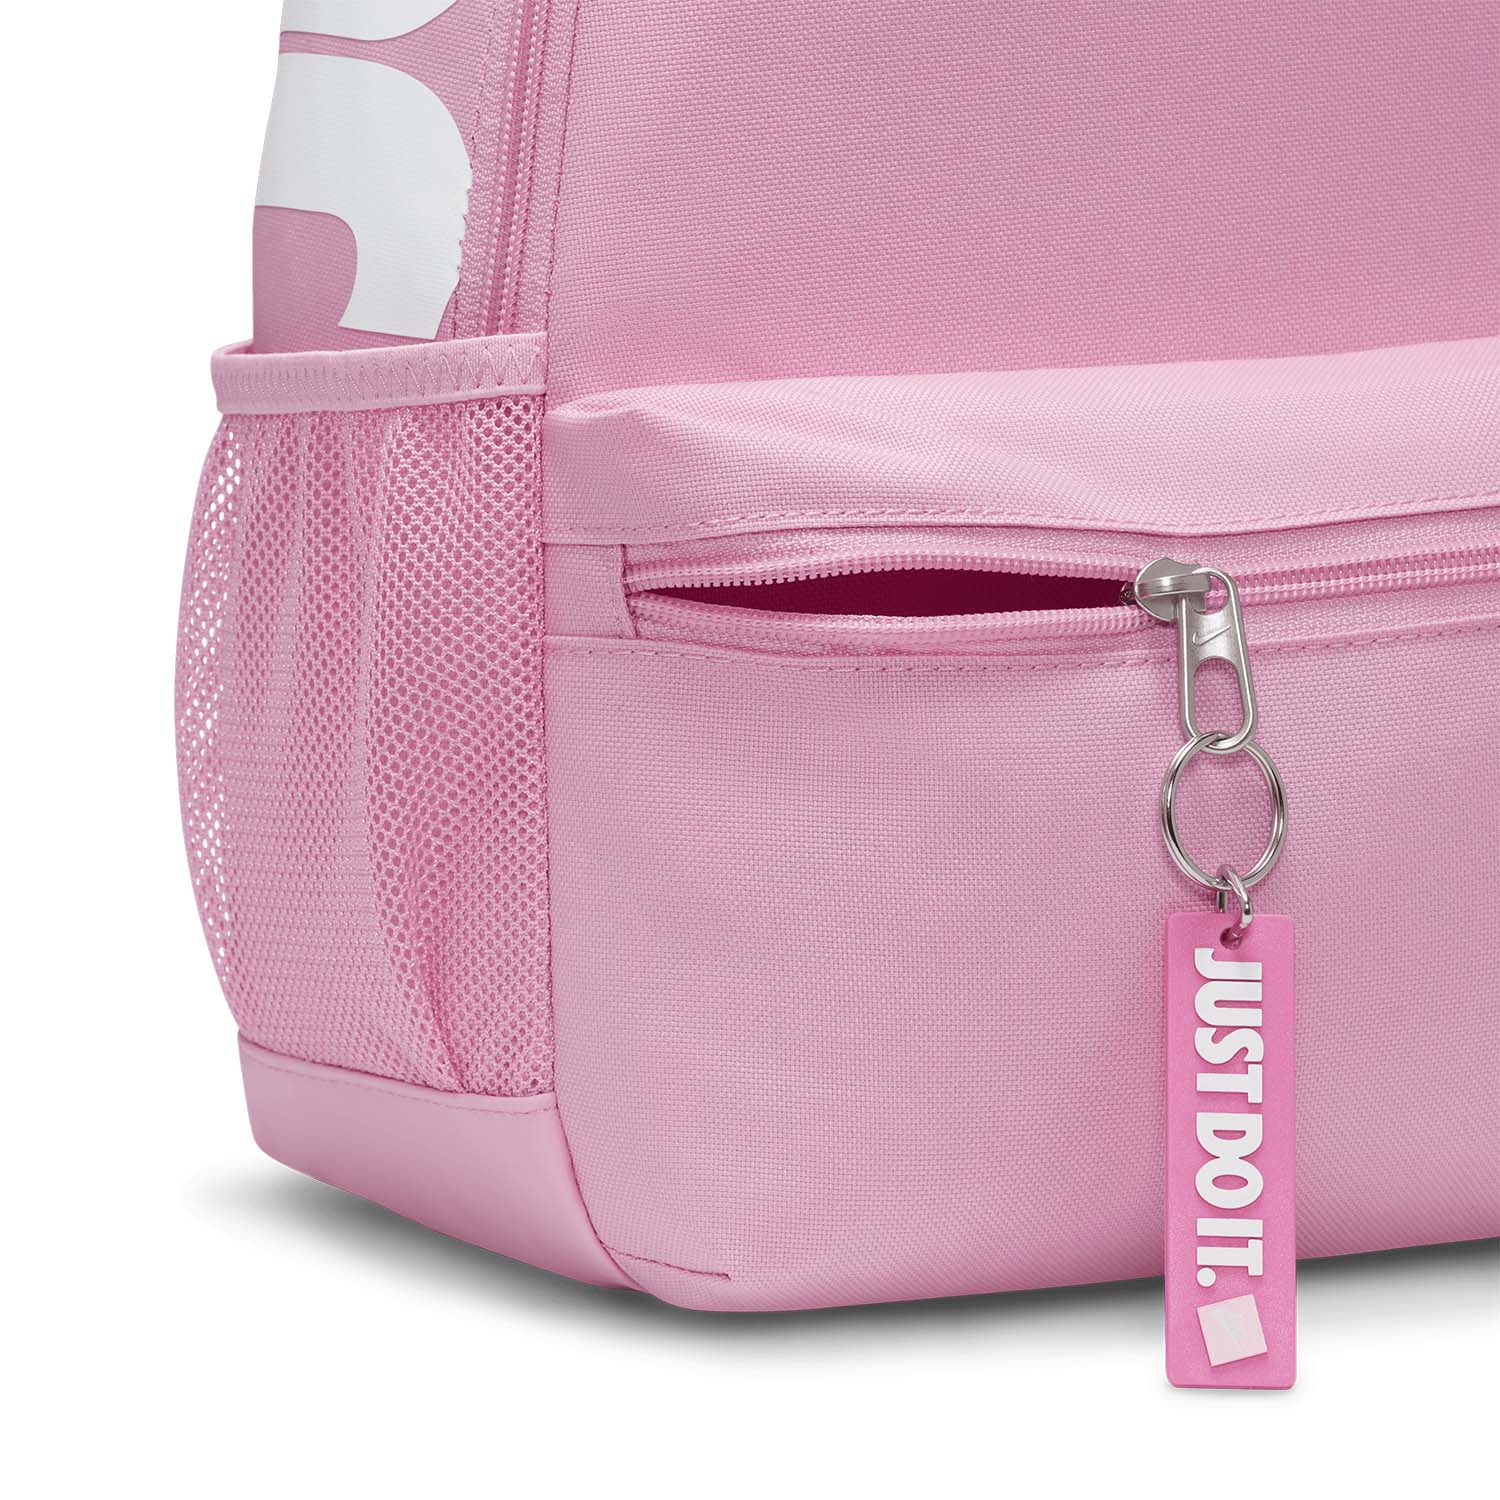 Nike Brasilia JDI Mini Backpack Junior - Pink Rise/White/Laser Fuchsia